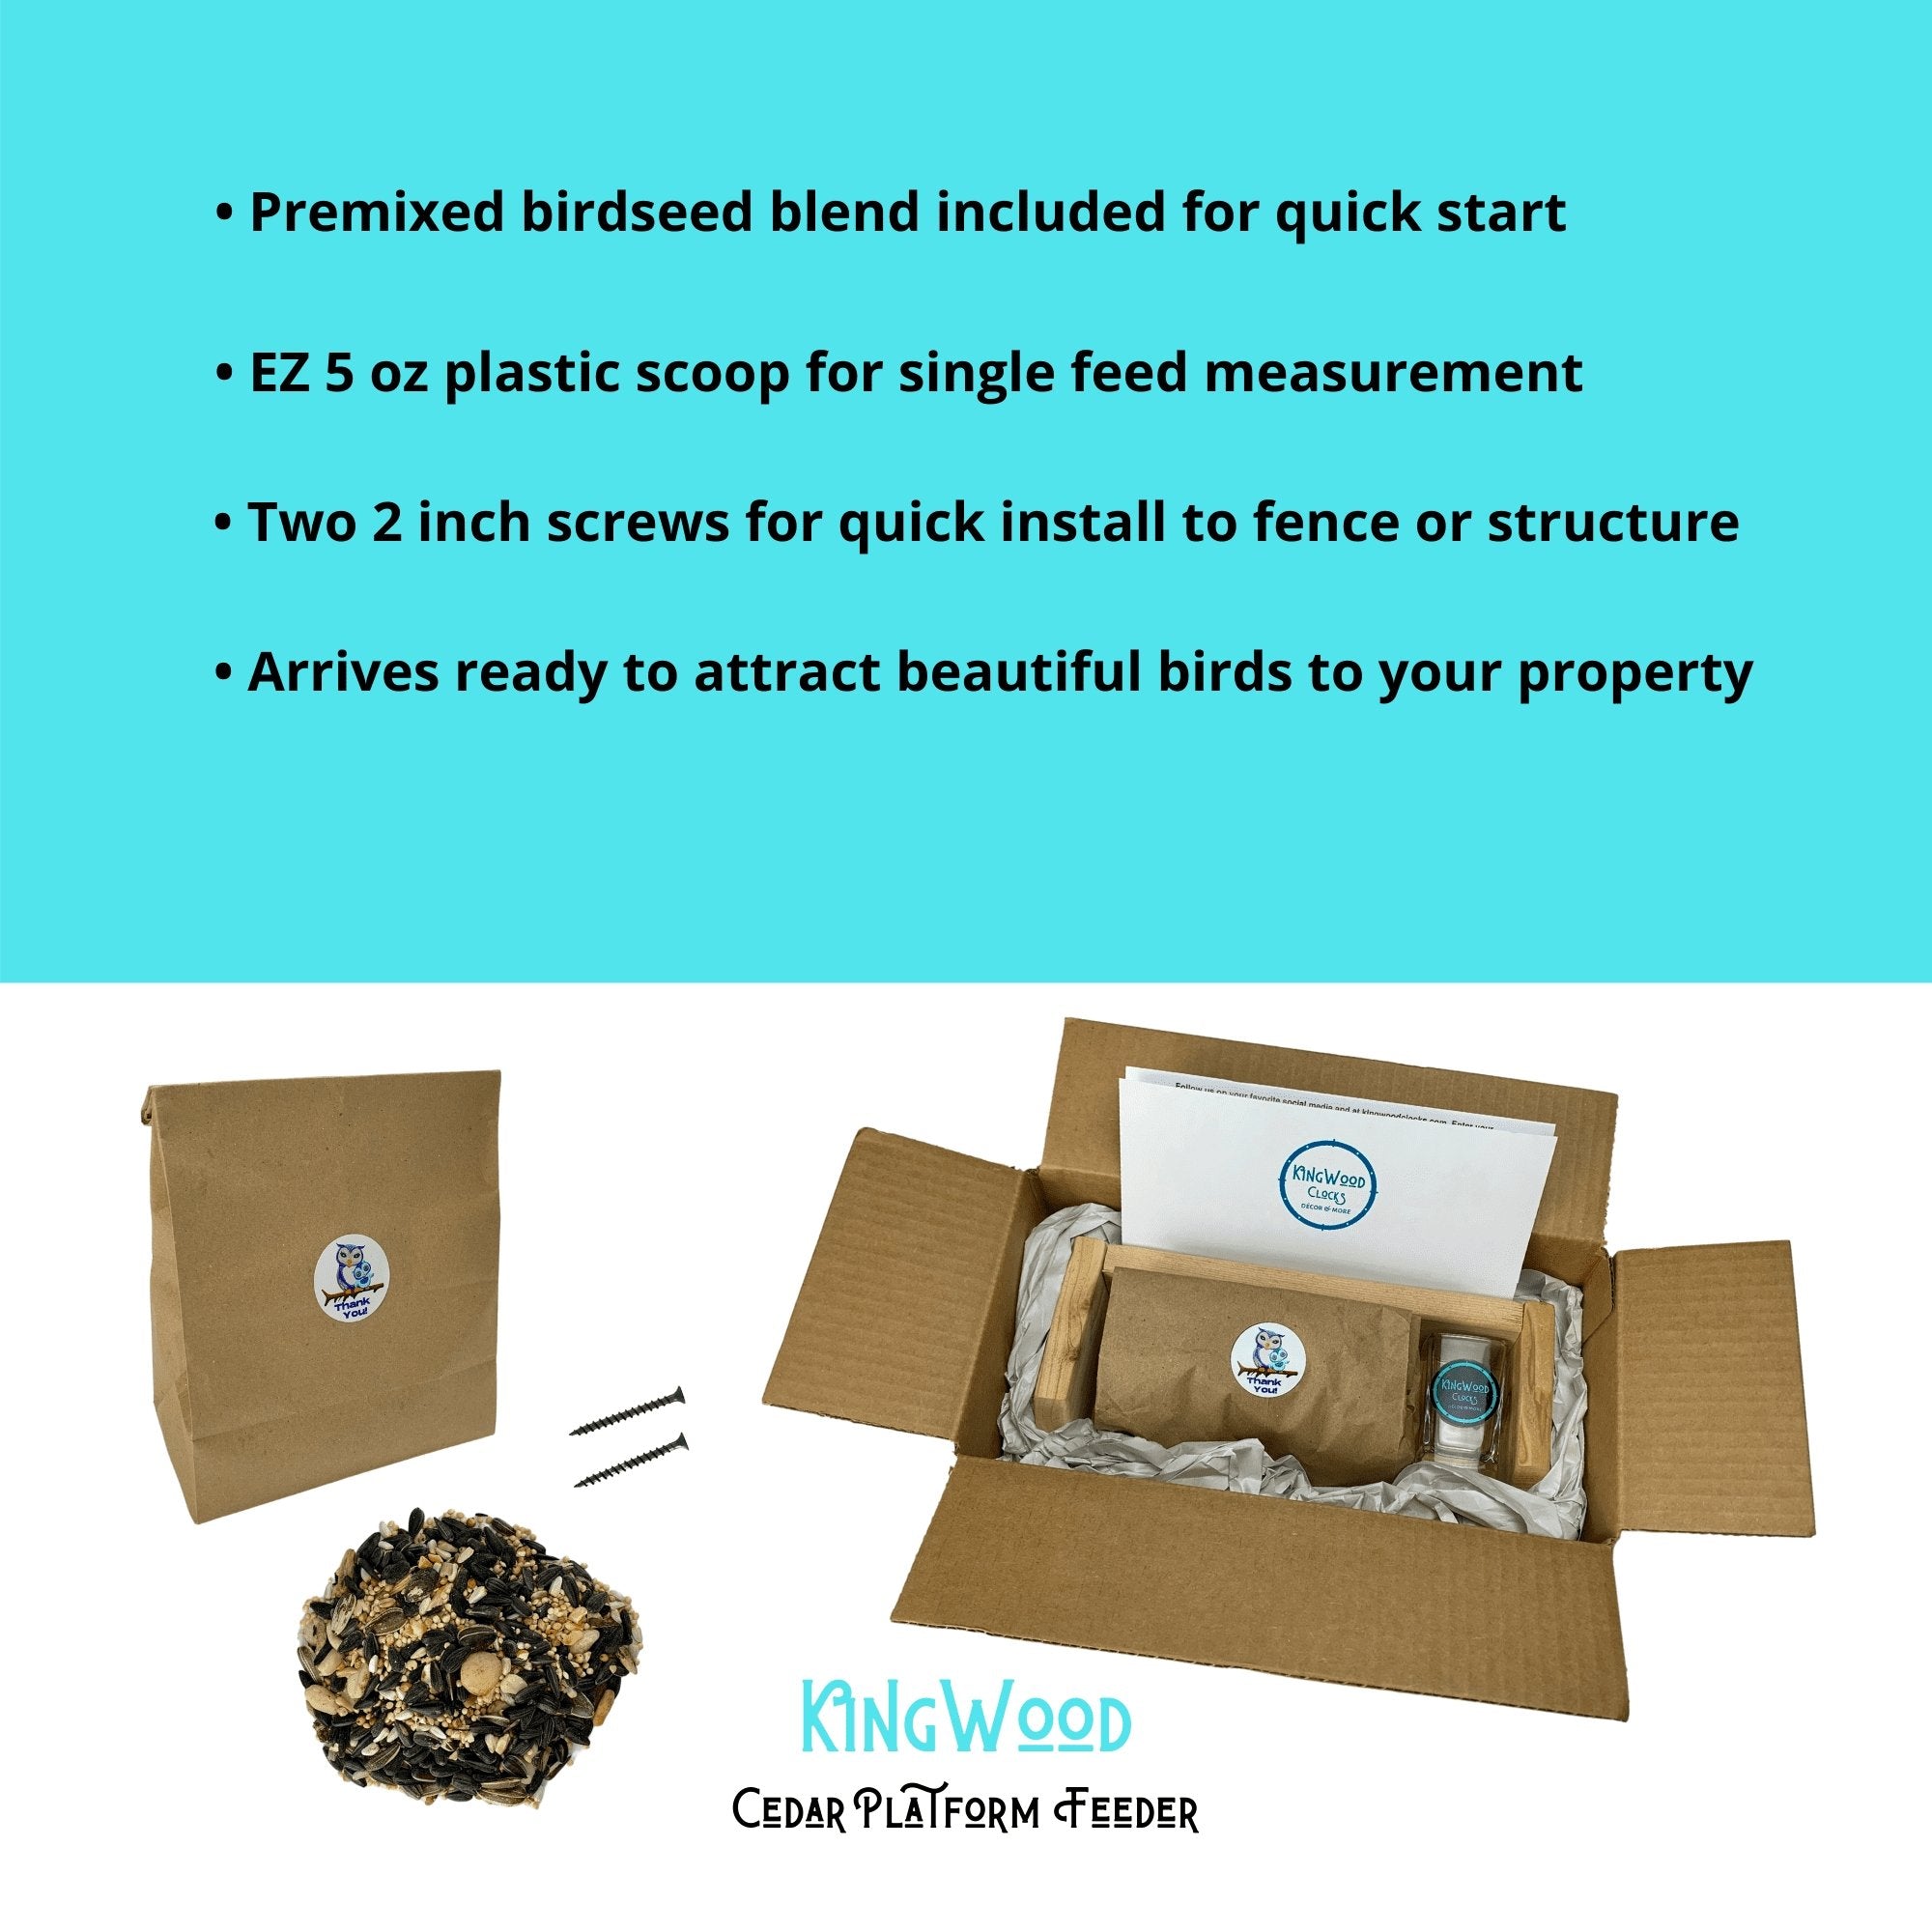 KingWood Platform Bird Feeder Info slide with package reveal